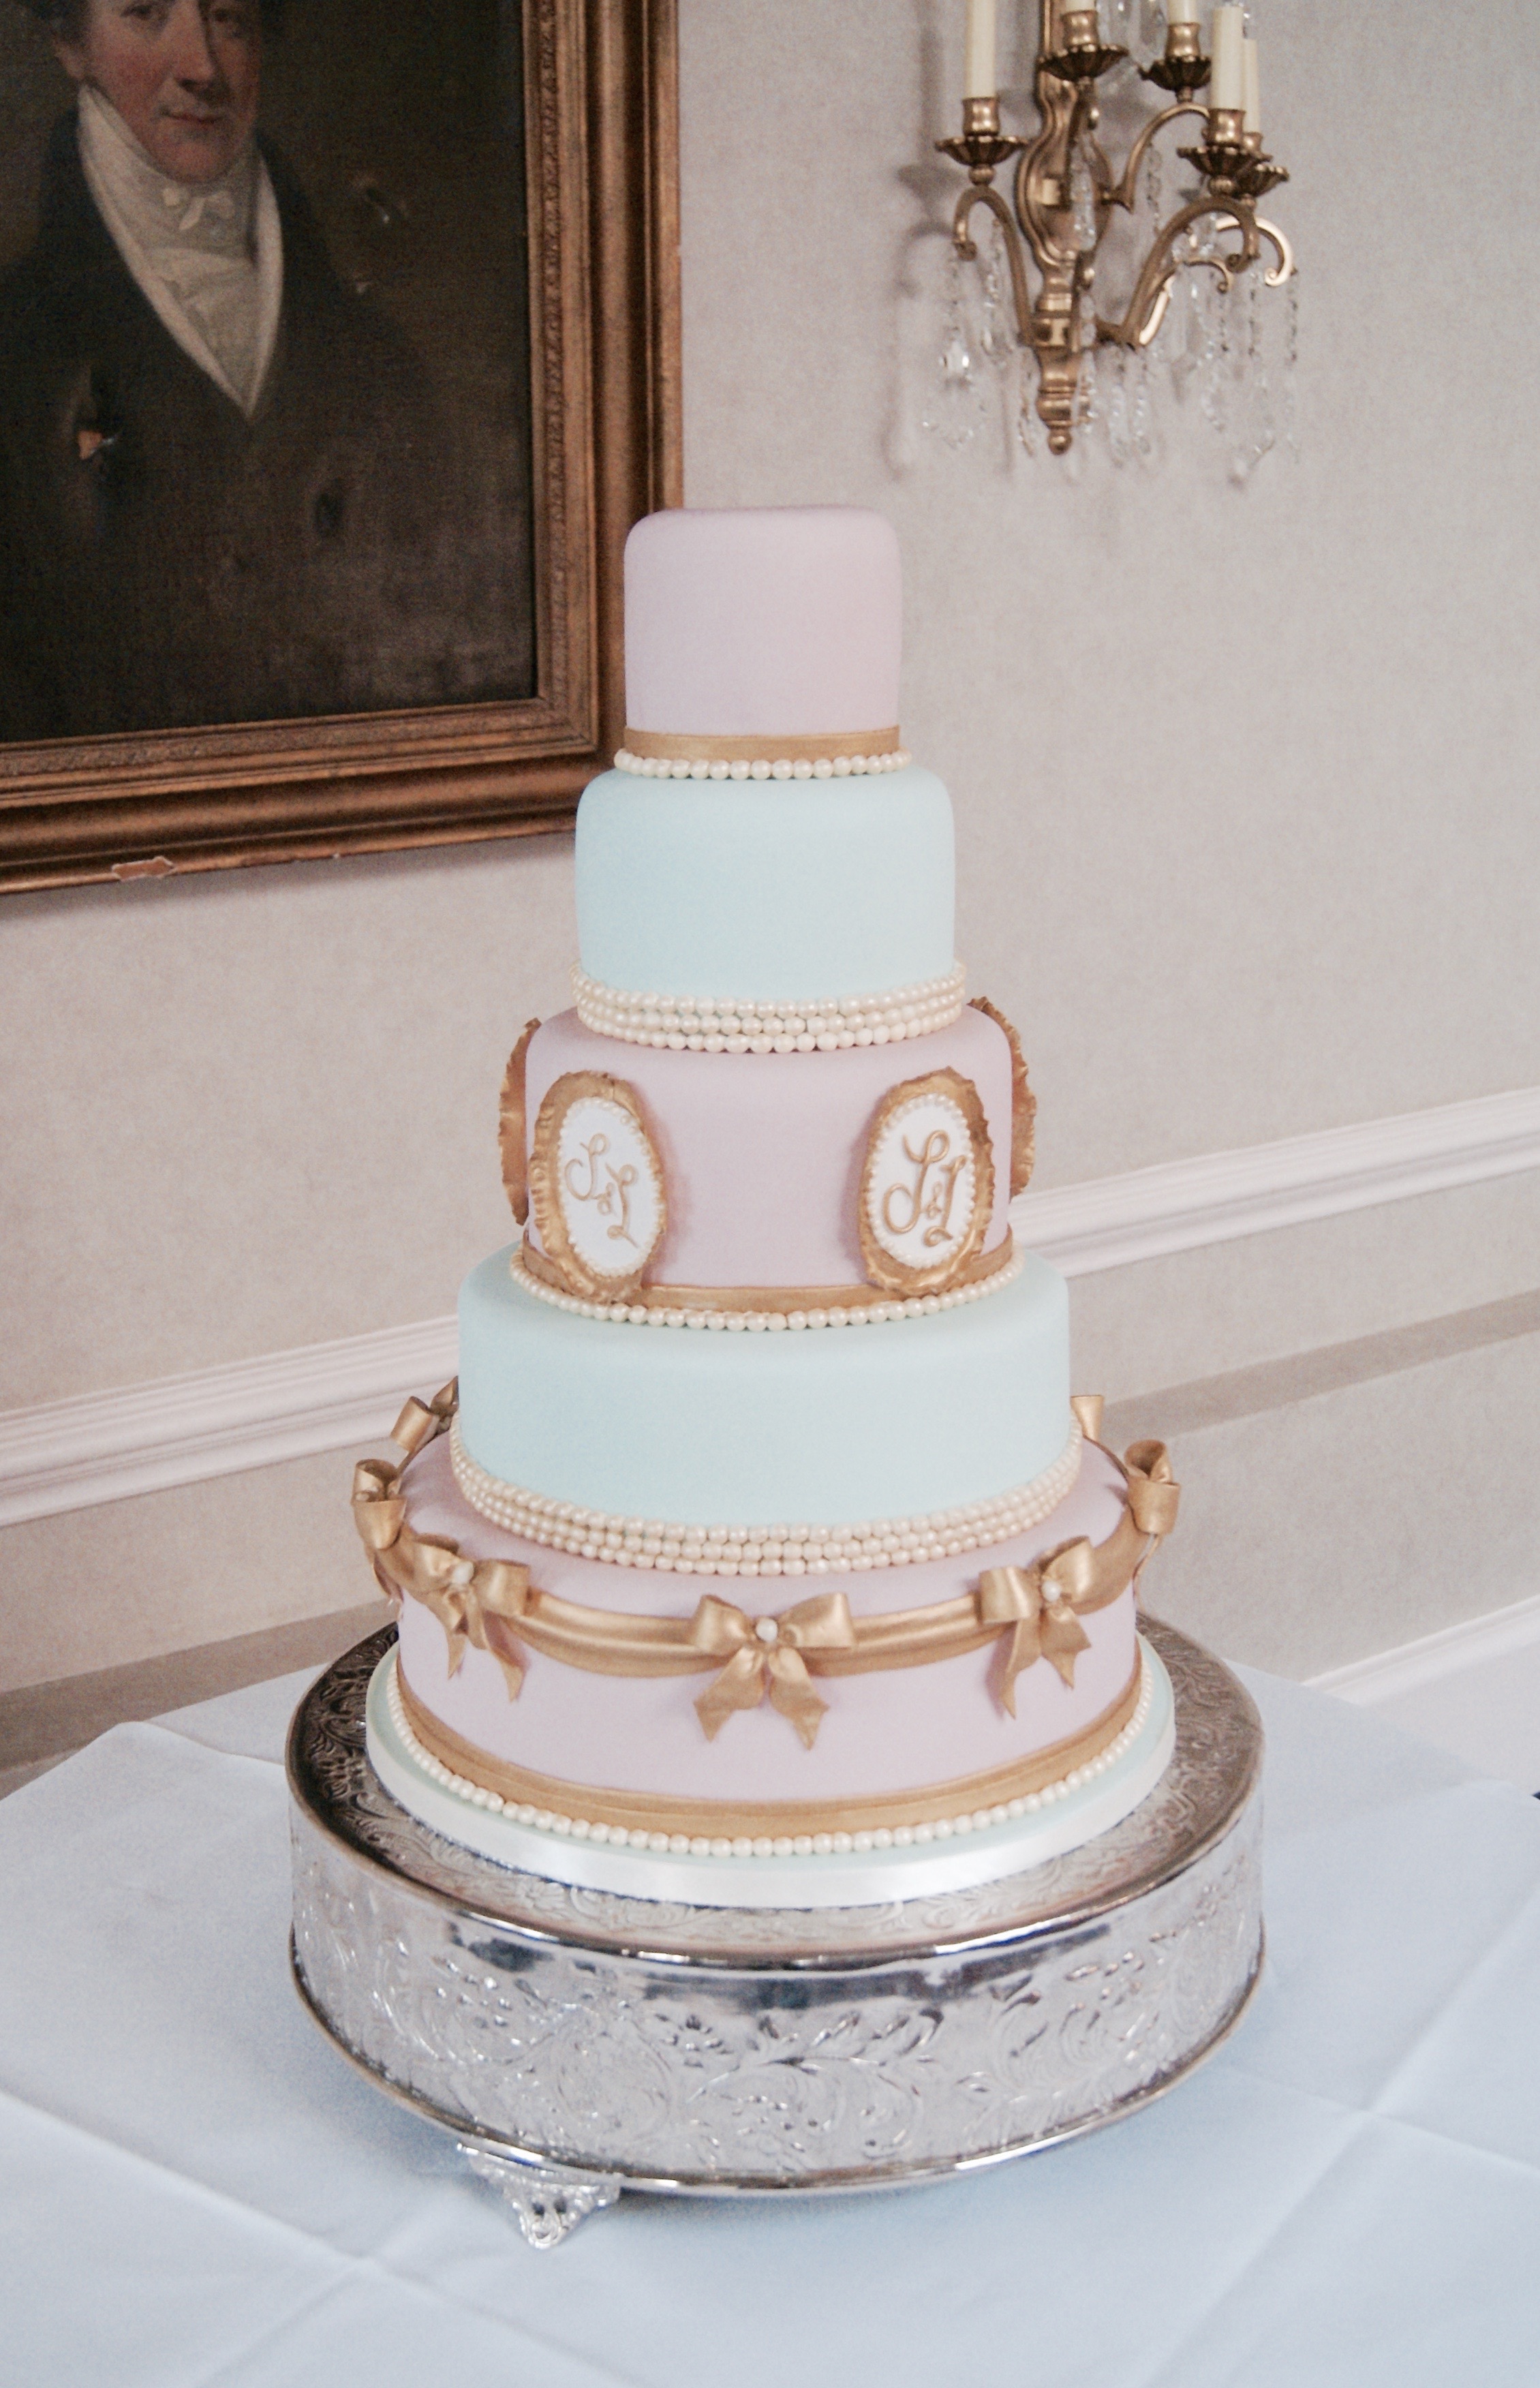 Ladurée Style Wedding Cakes